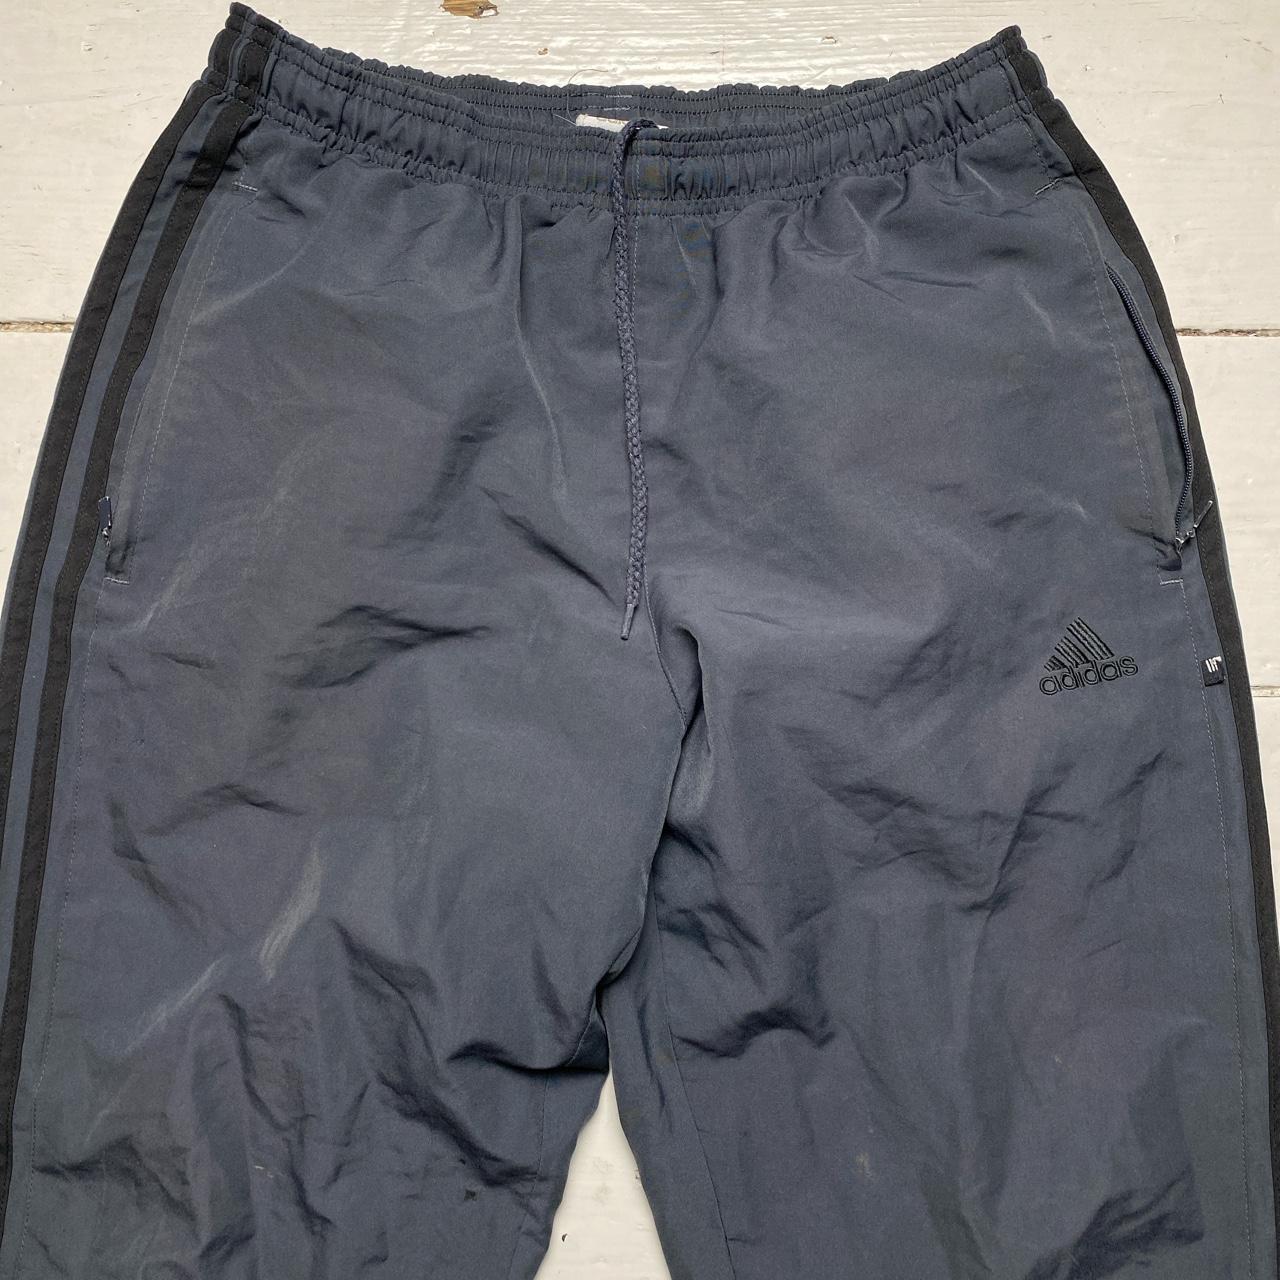 Adidas Baggy Shell Track Pant Grey and Black Bottoms